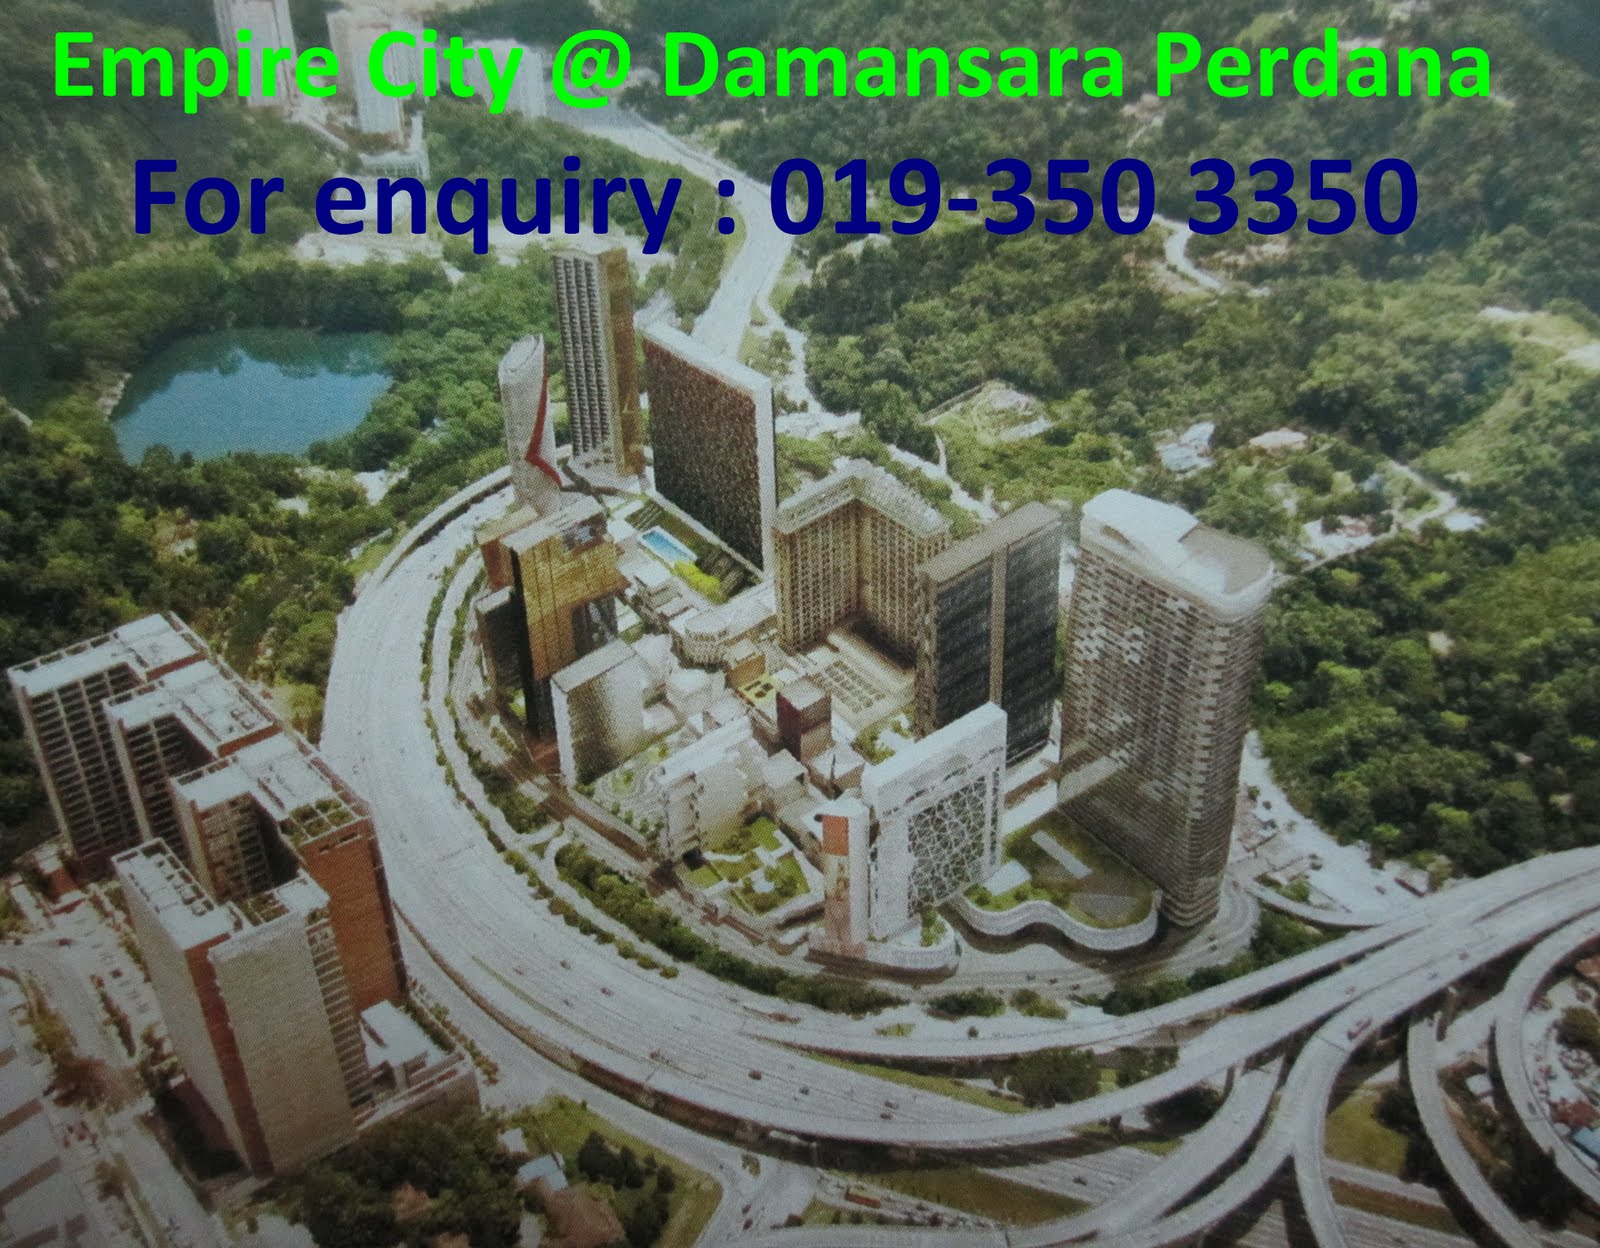 Malaysia Property Investment: Empire City @ Damansara Perdana